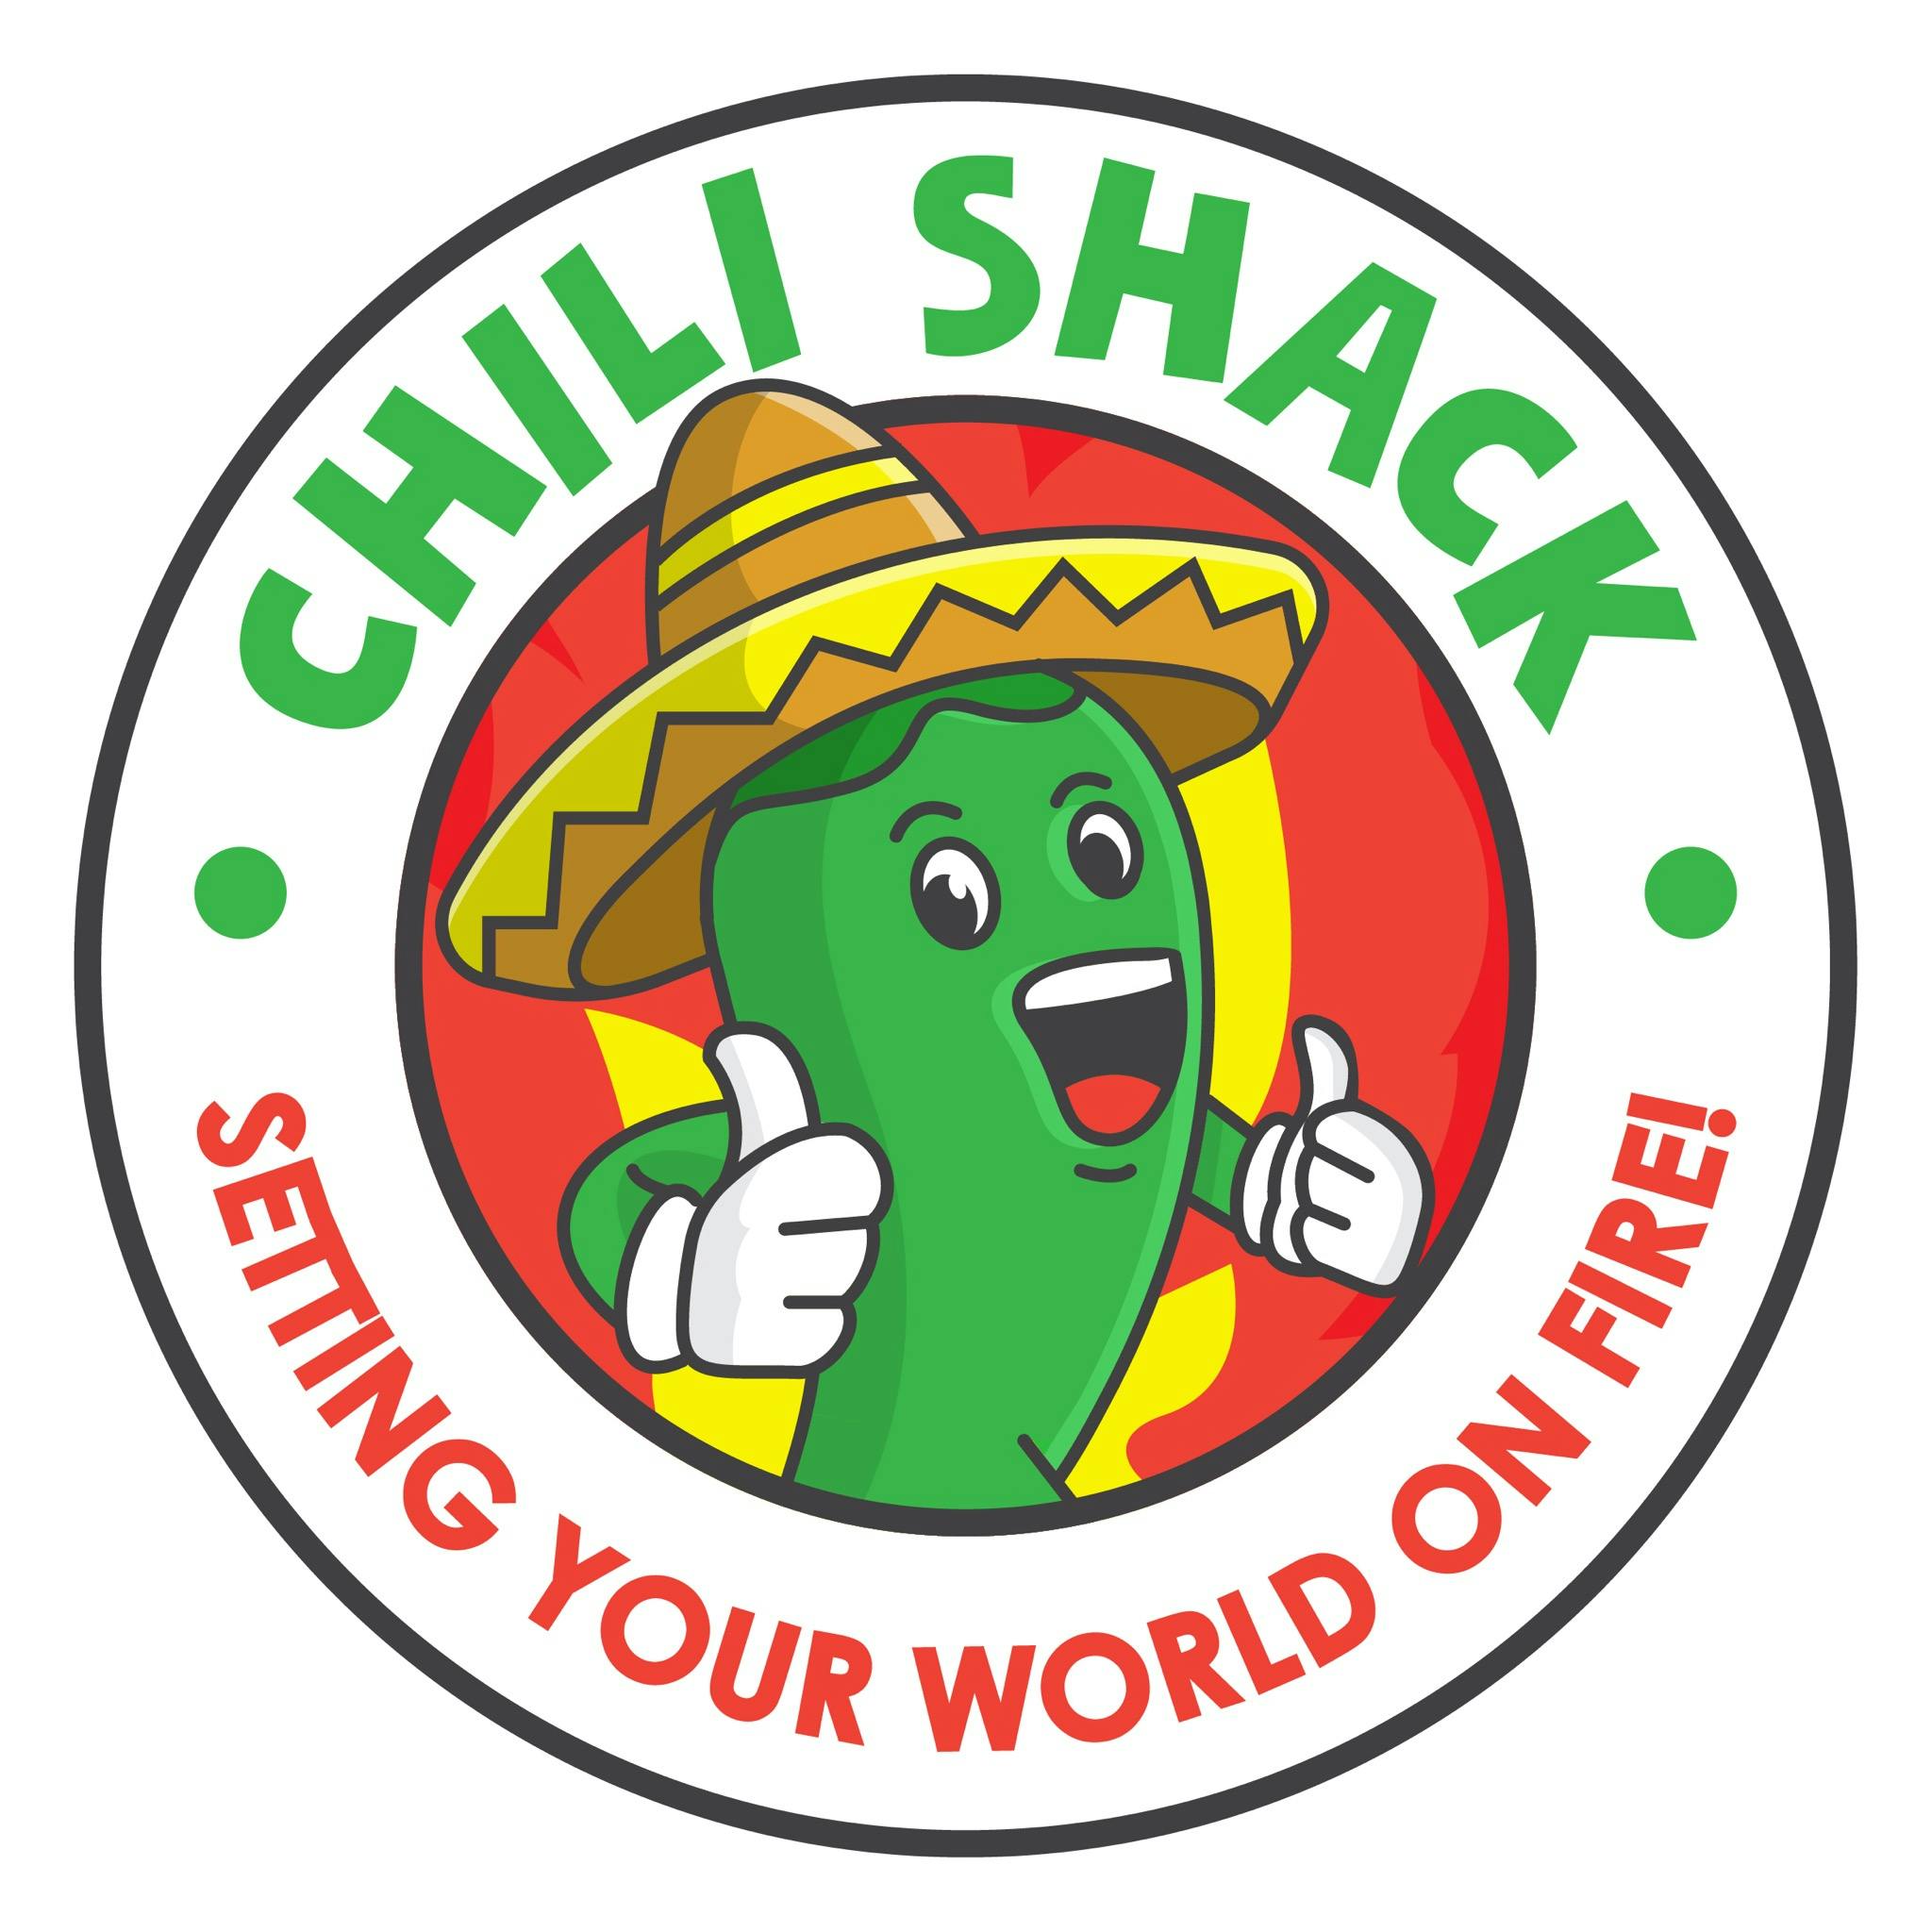 Chili Shack menu in Lakewood, CO 80260